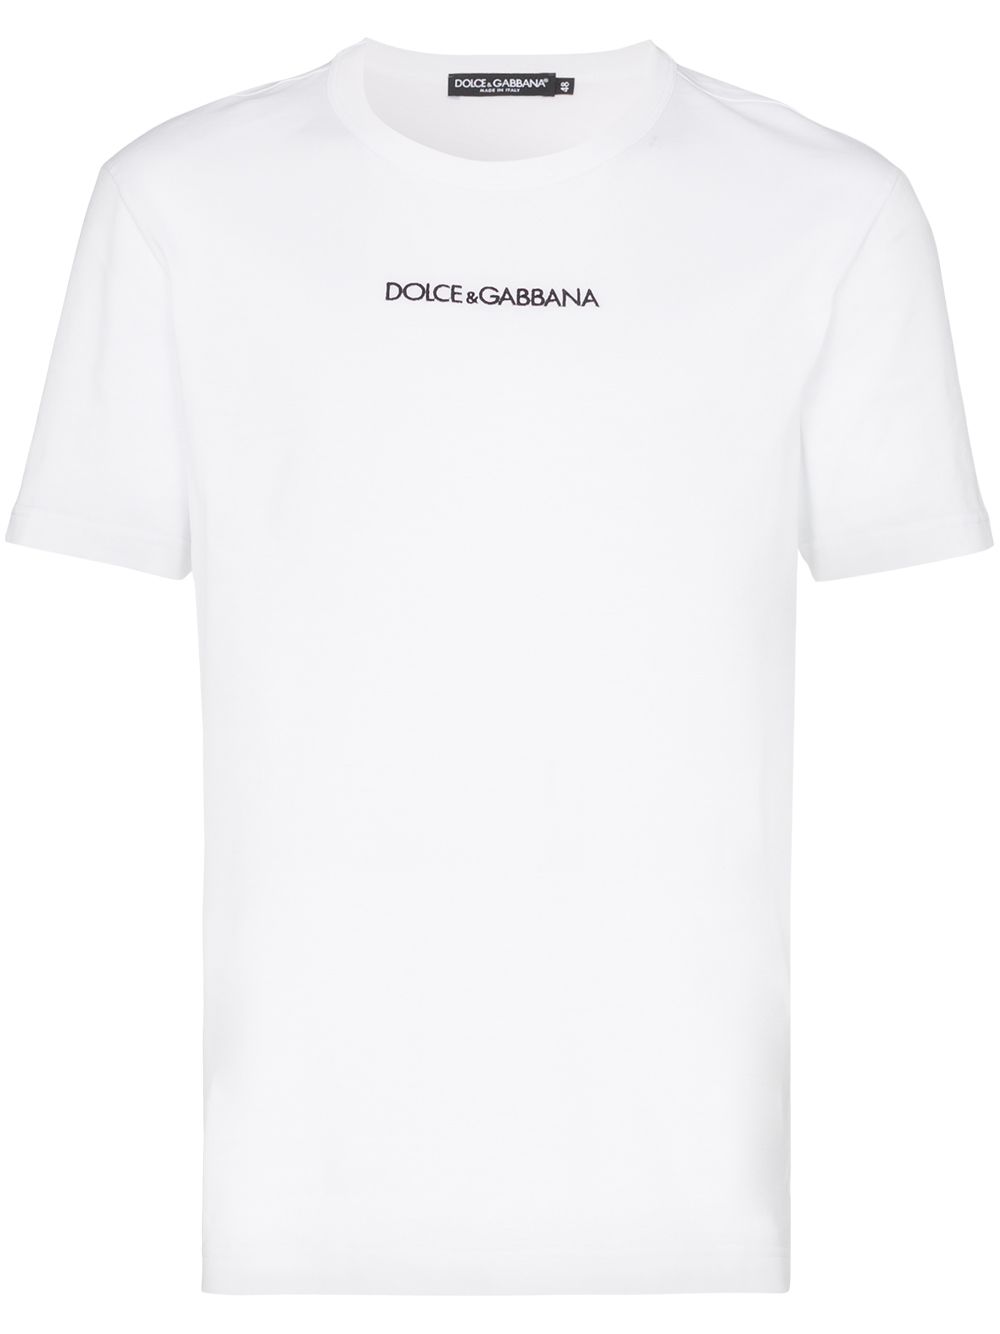 фото Dolce & Gabbana футболка с вышитым логотипом